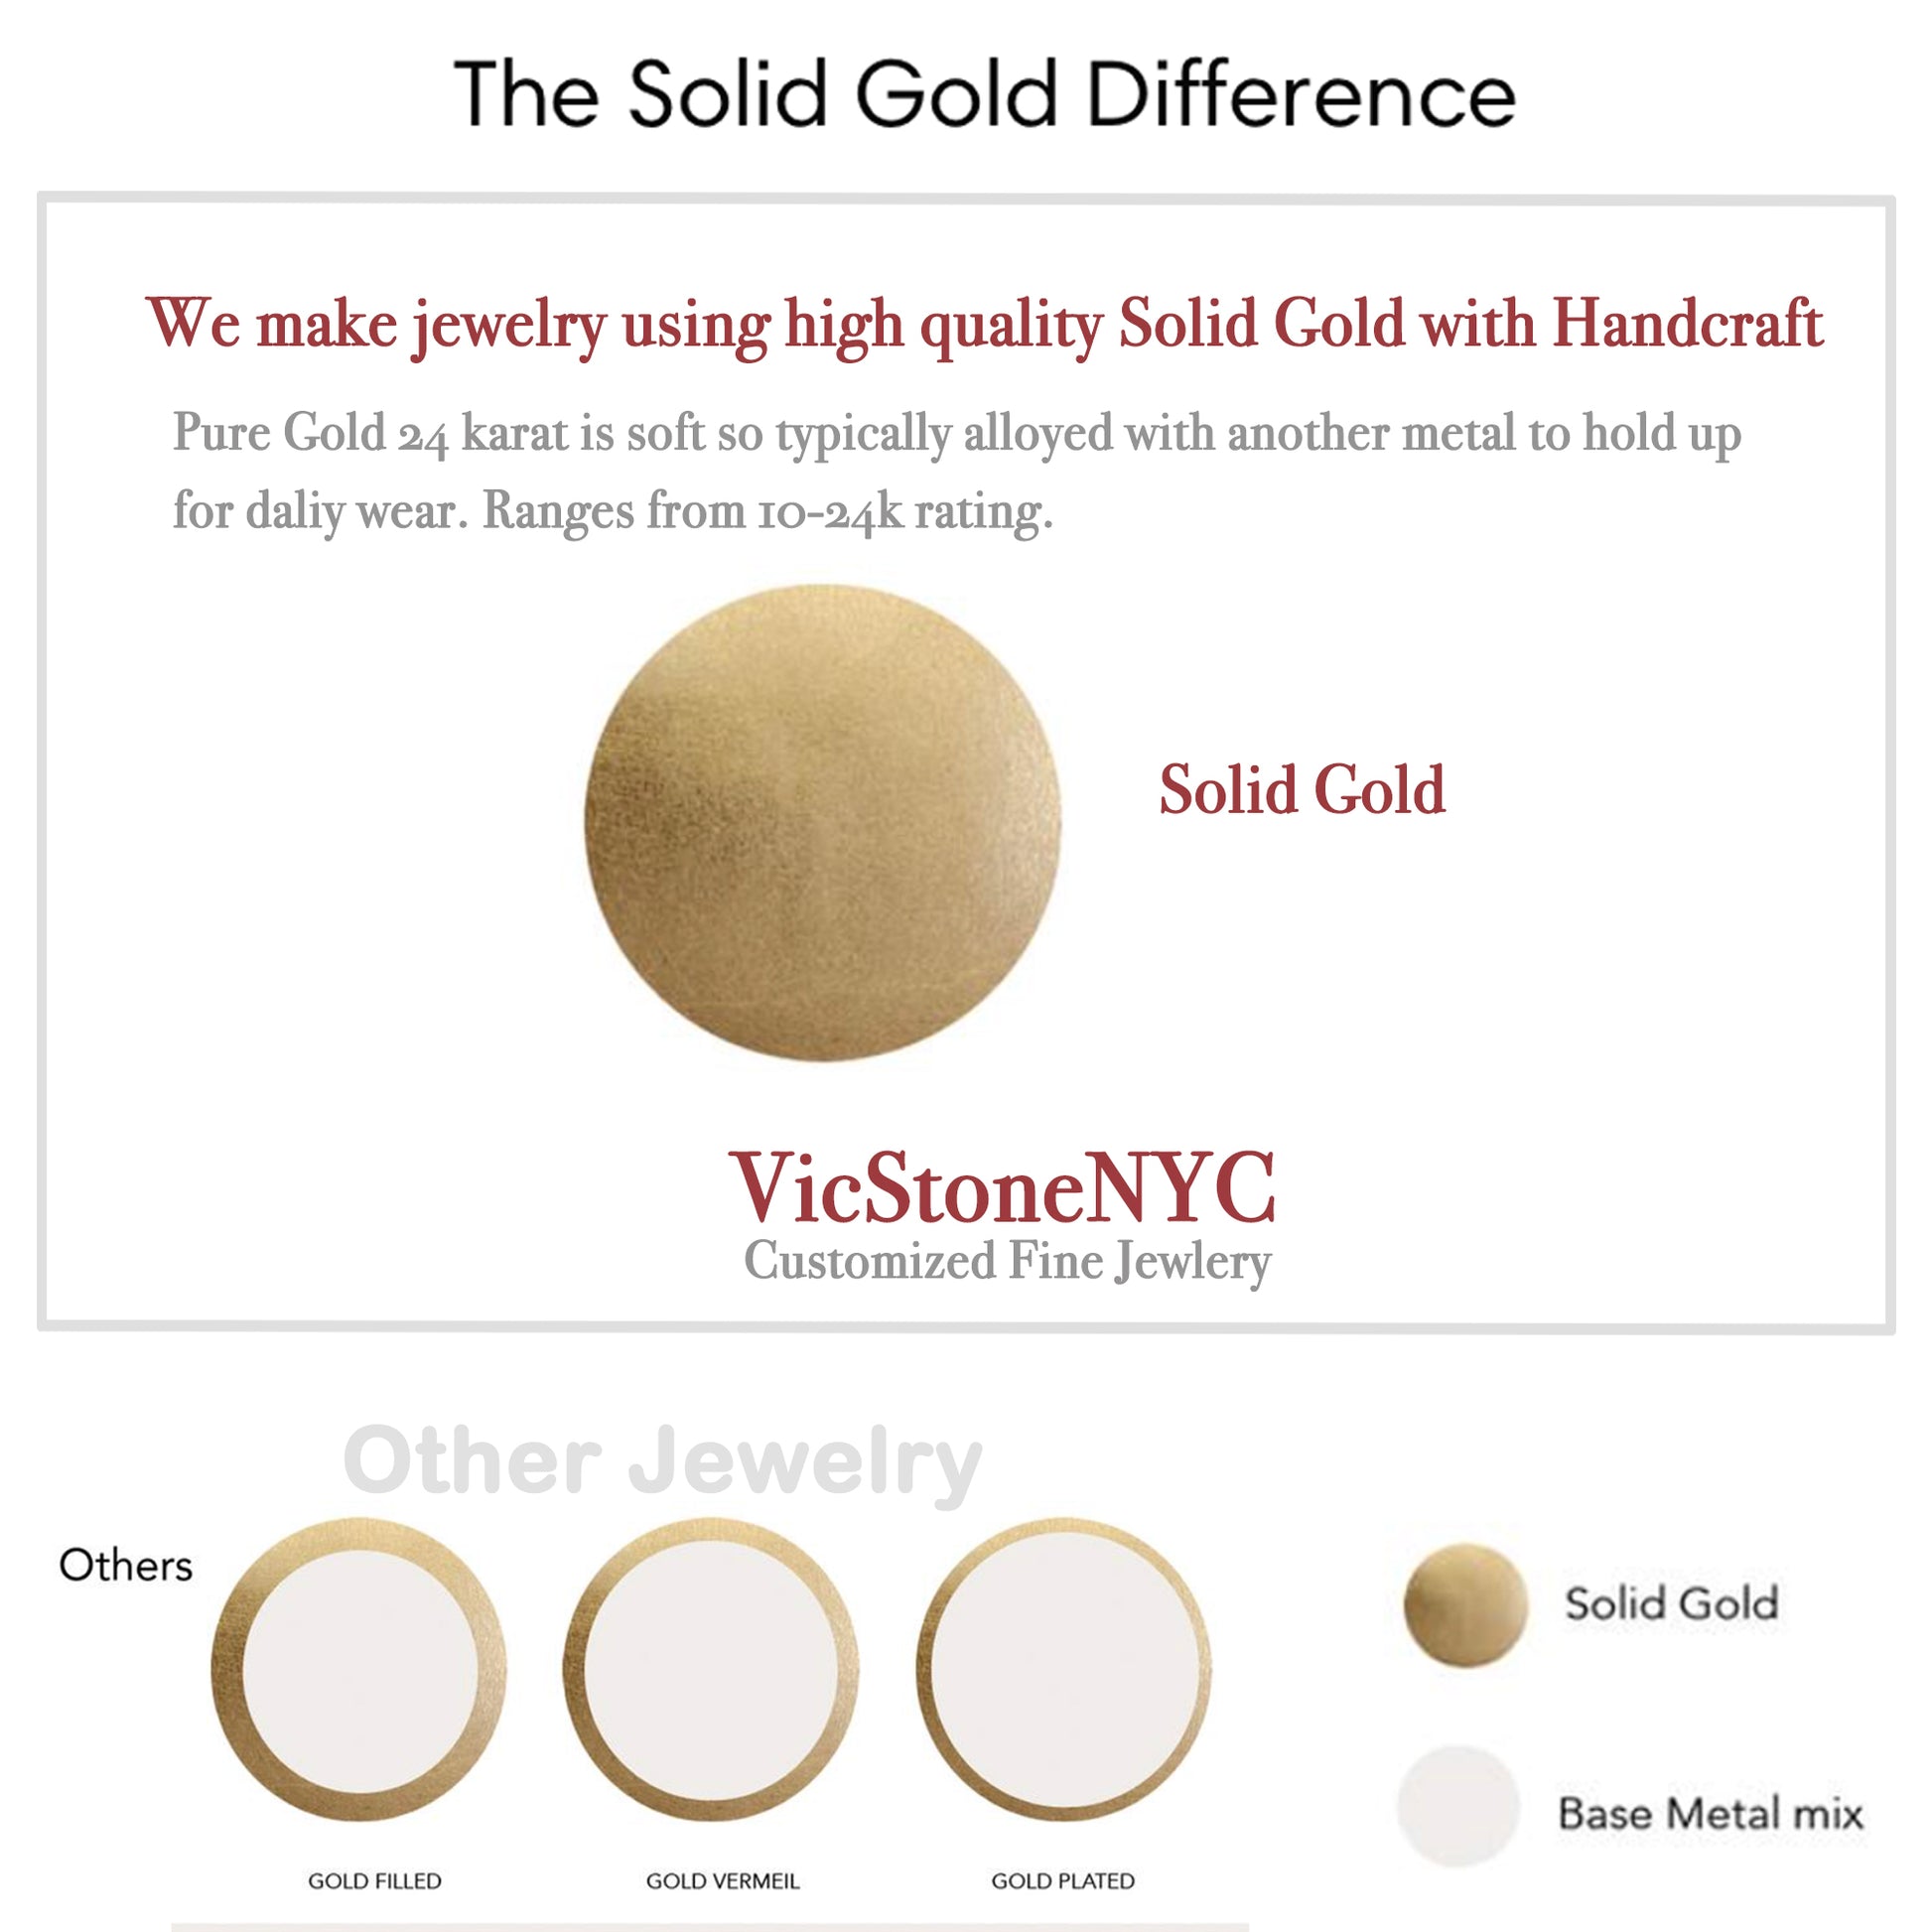 14k Natural Diamond Comfortable Bold Gold Ring.